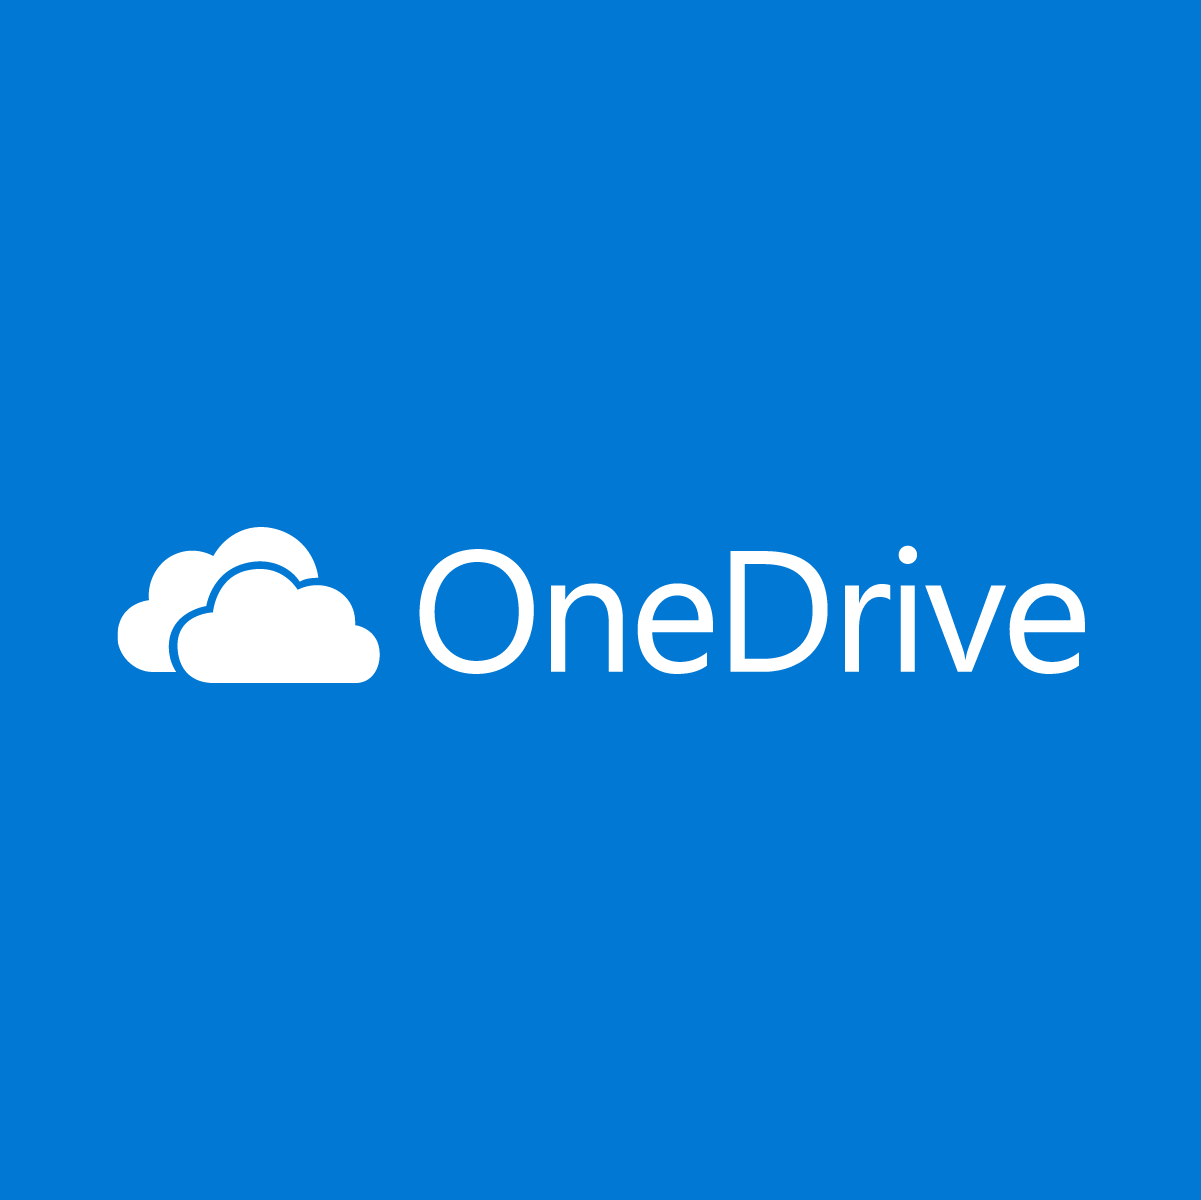 New Azure Logo - Microsoft OneDrive